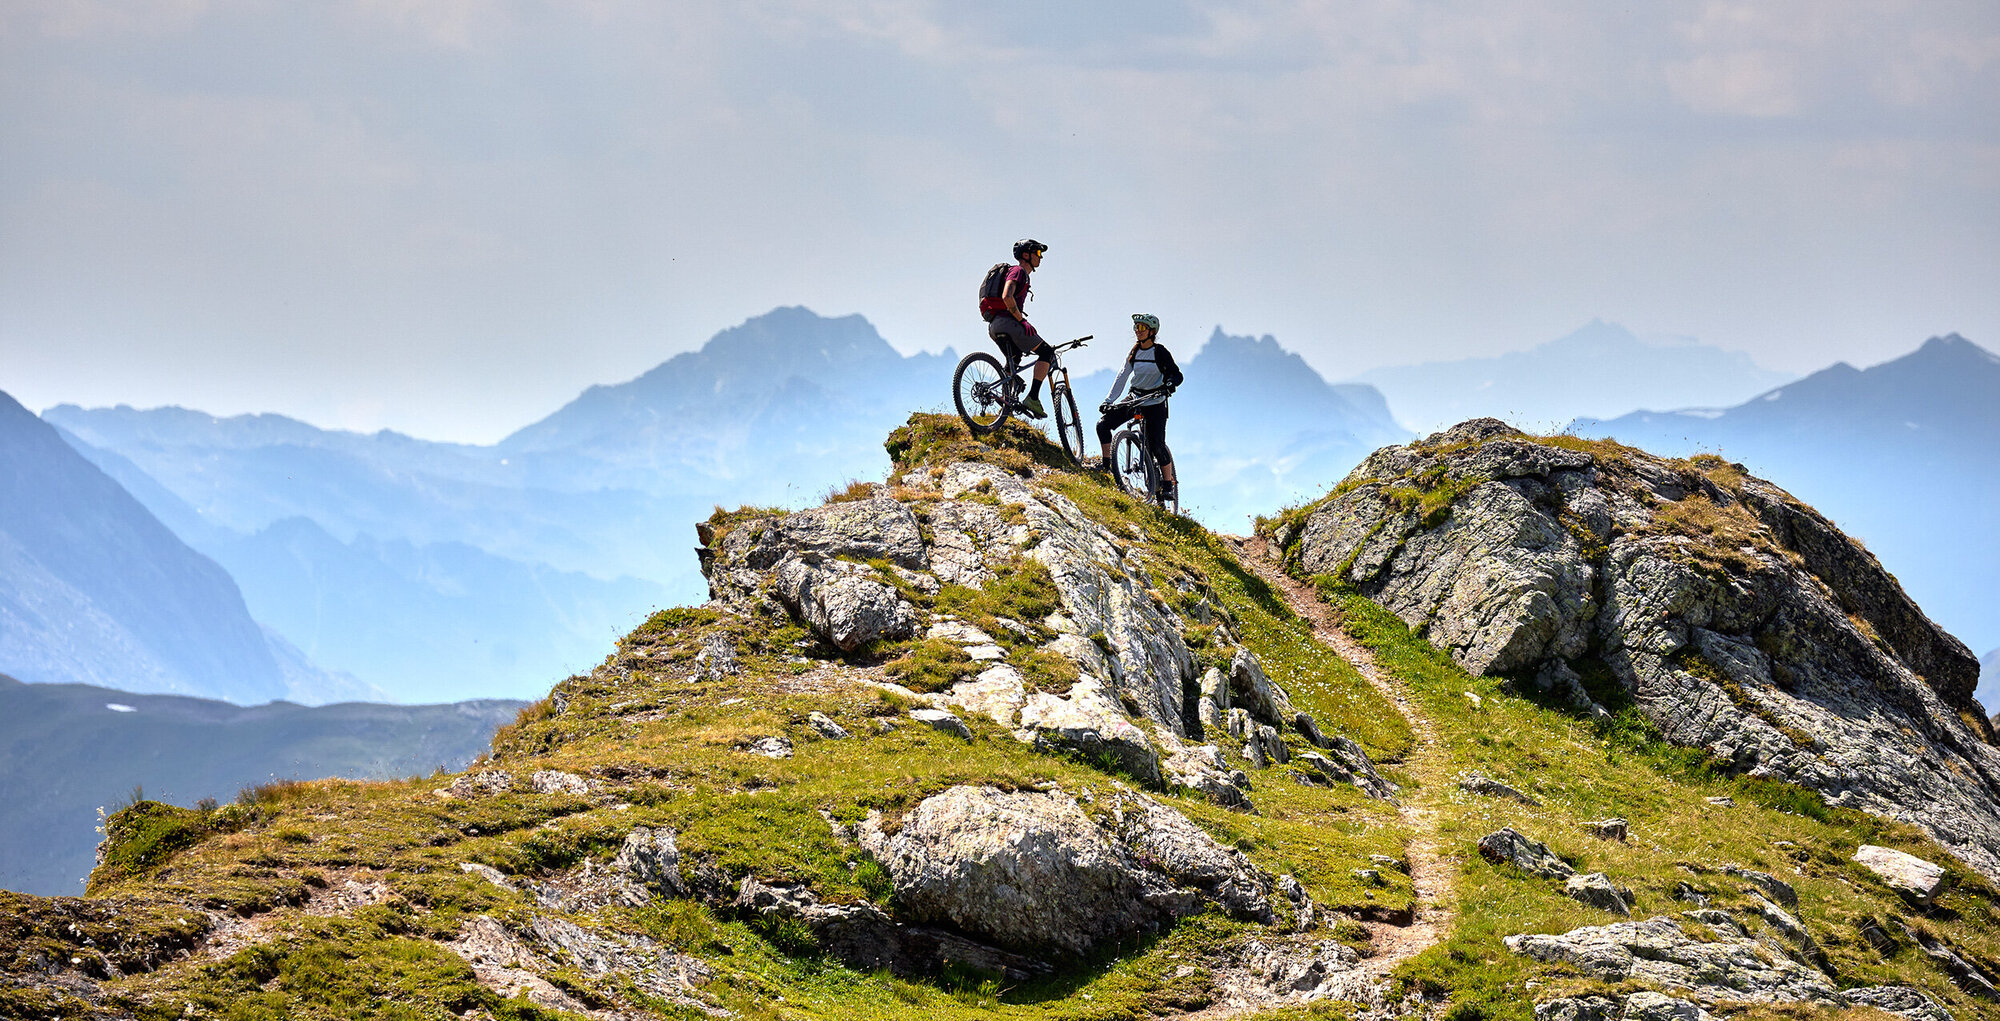   Mountain biking in Ischgl